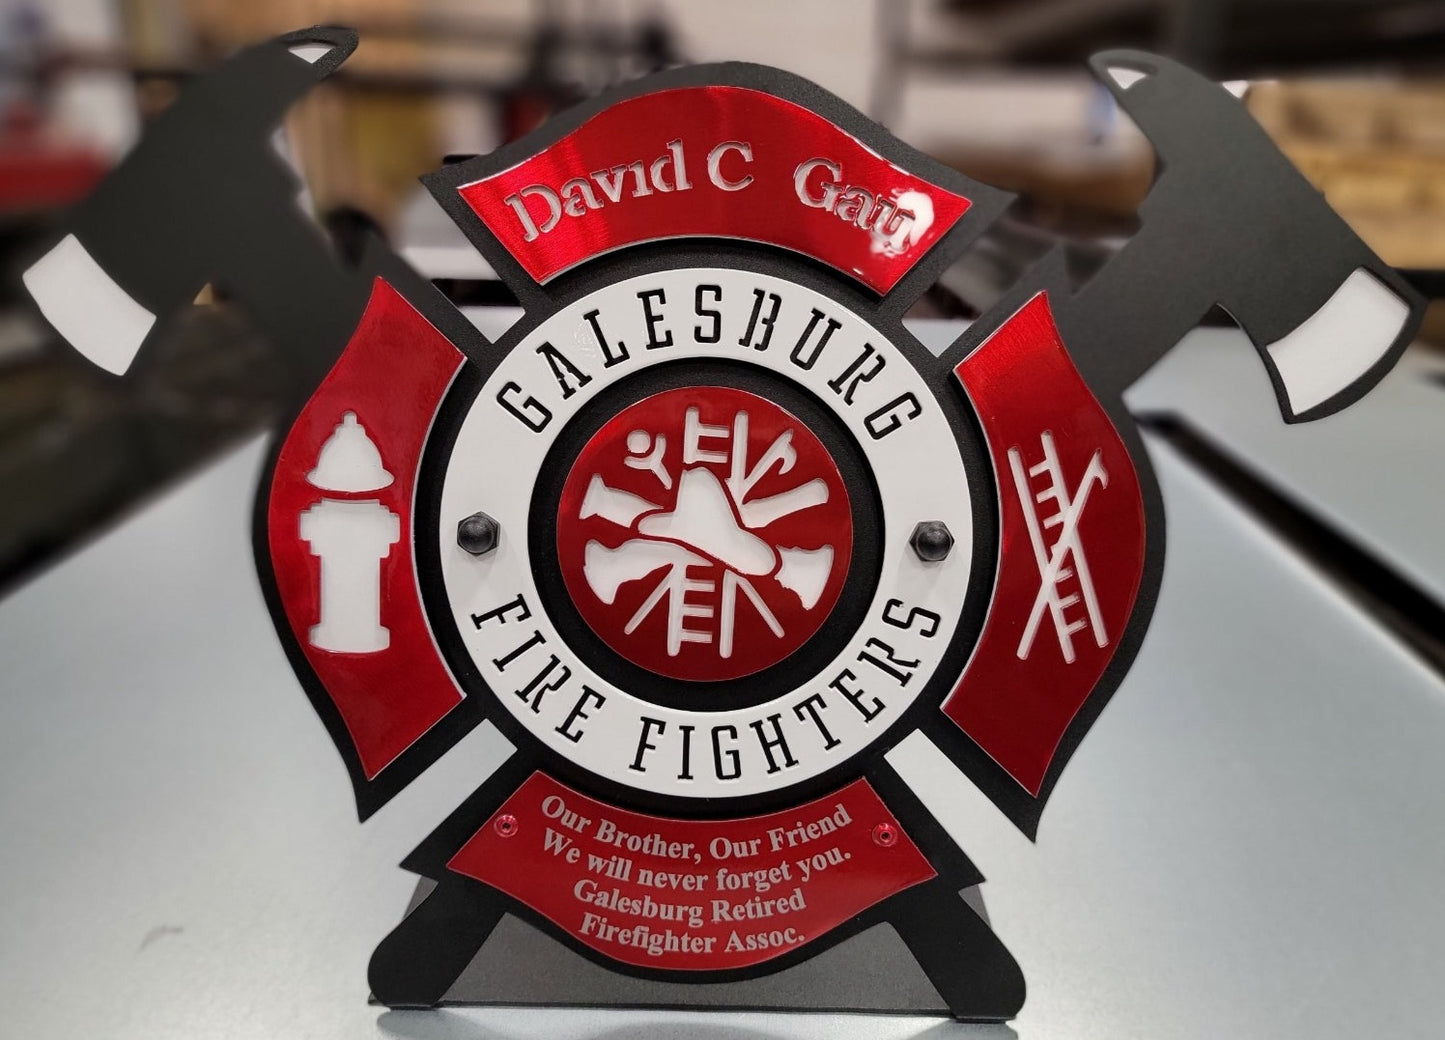 Galesburg Fire Department David C Gau